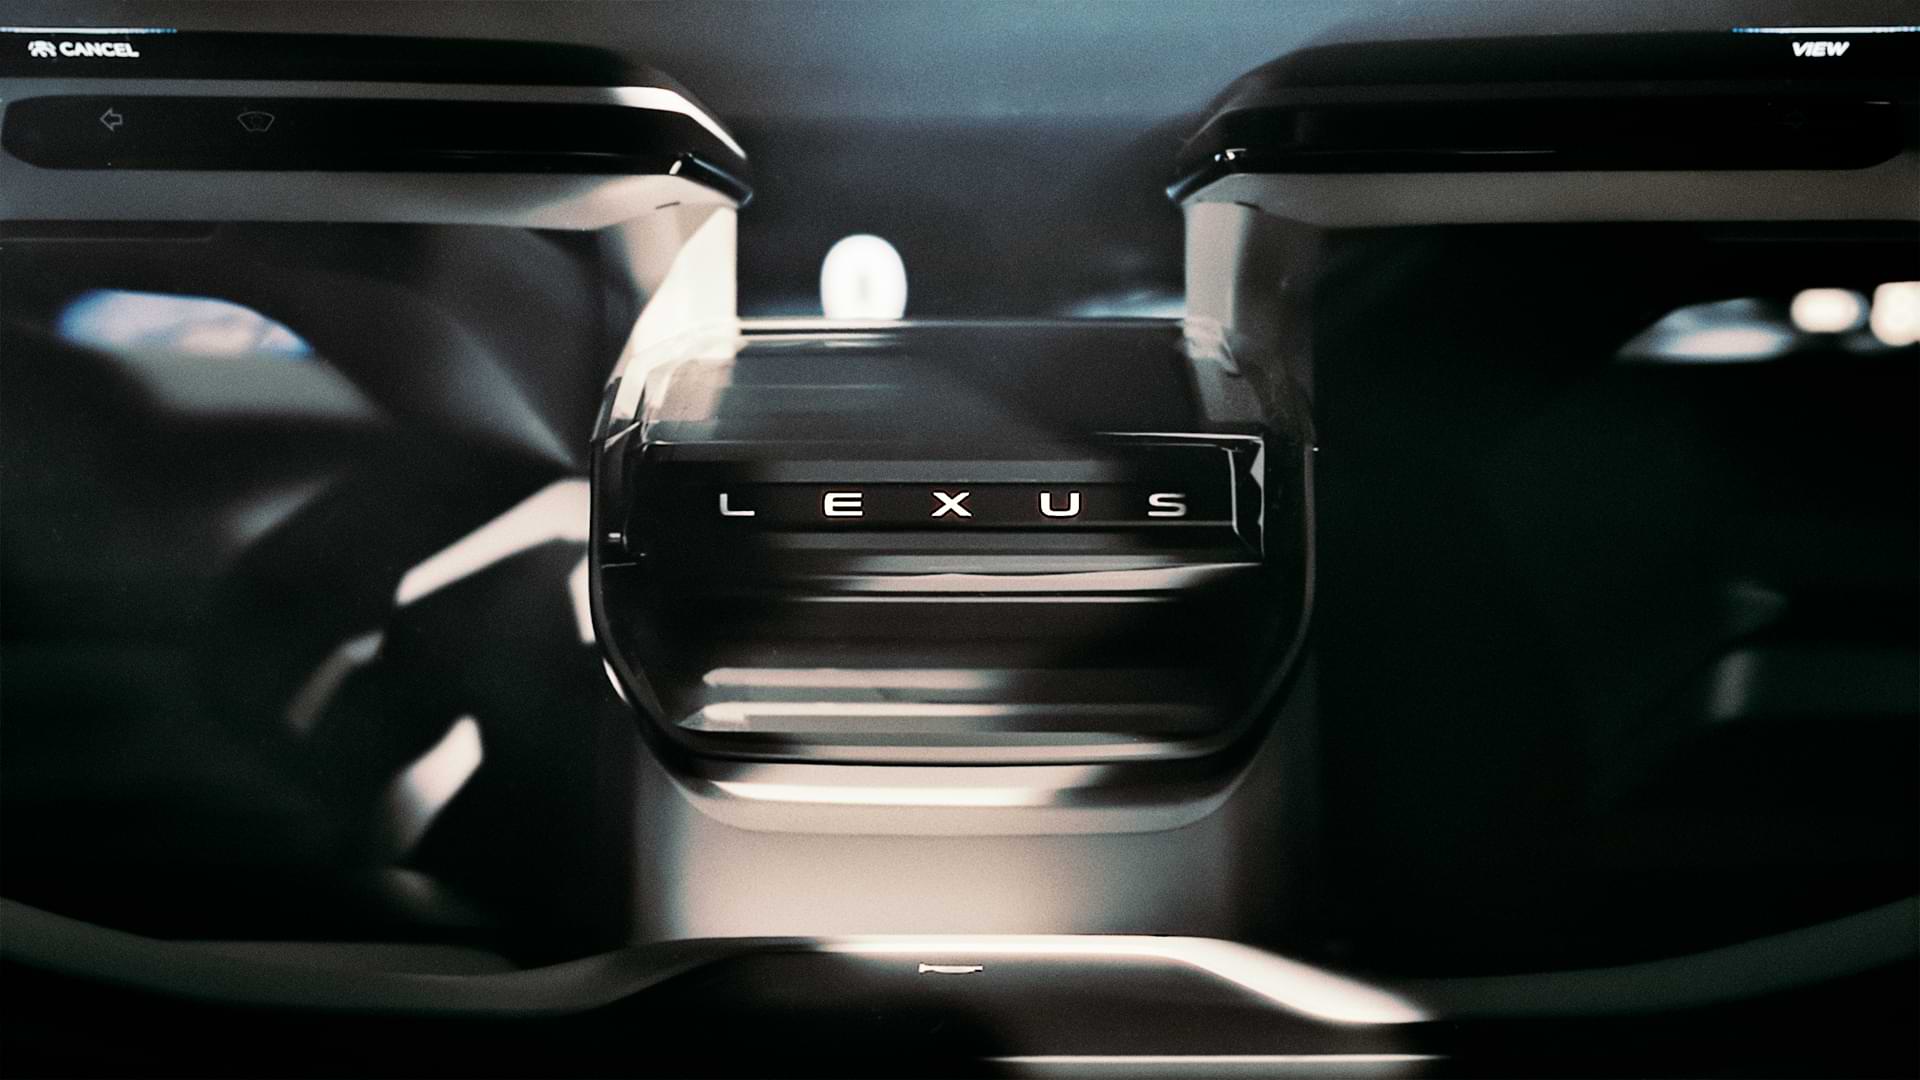 Closeup view of steering showing Lexus logo.